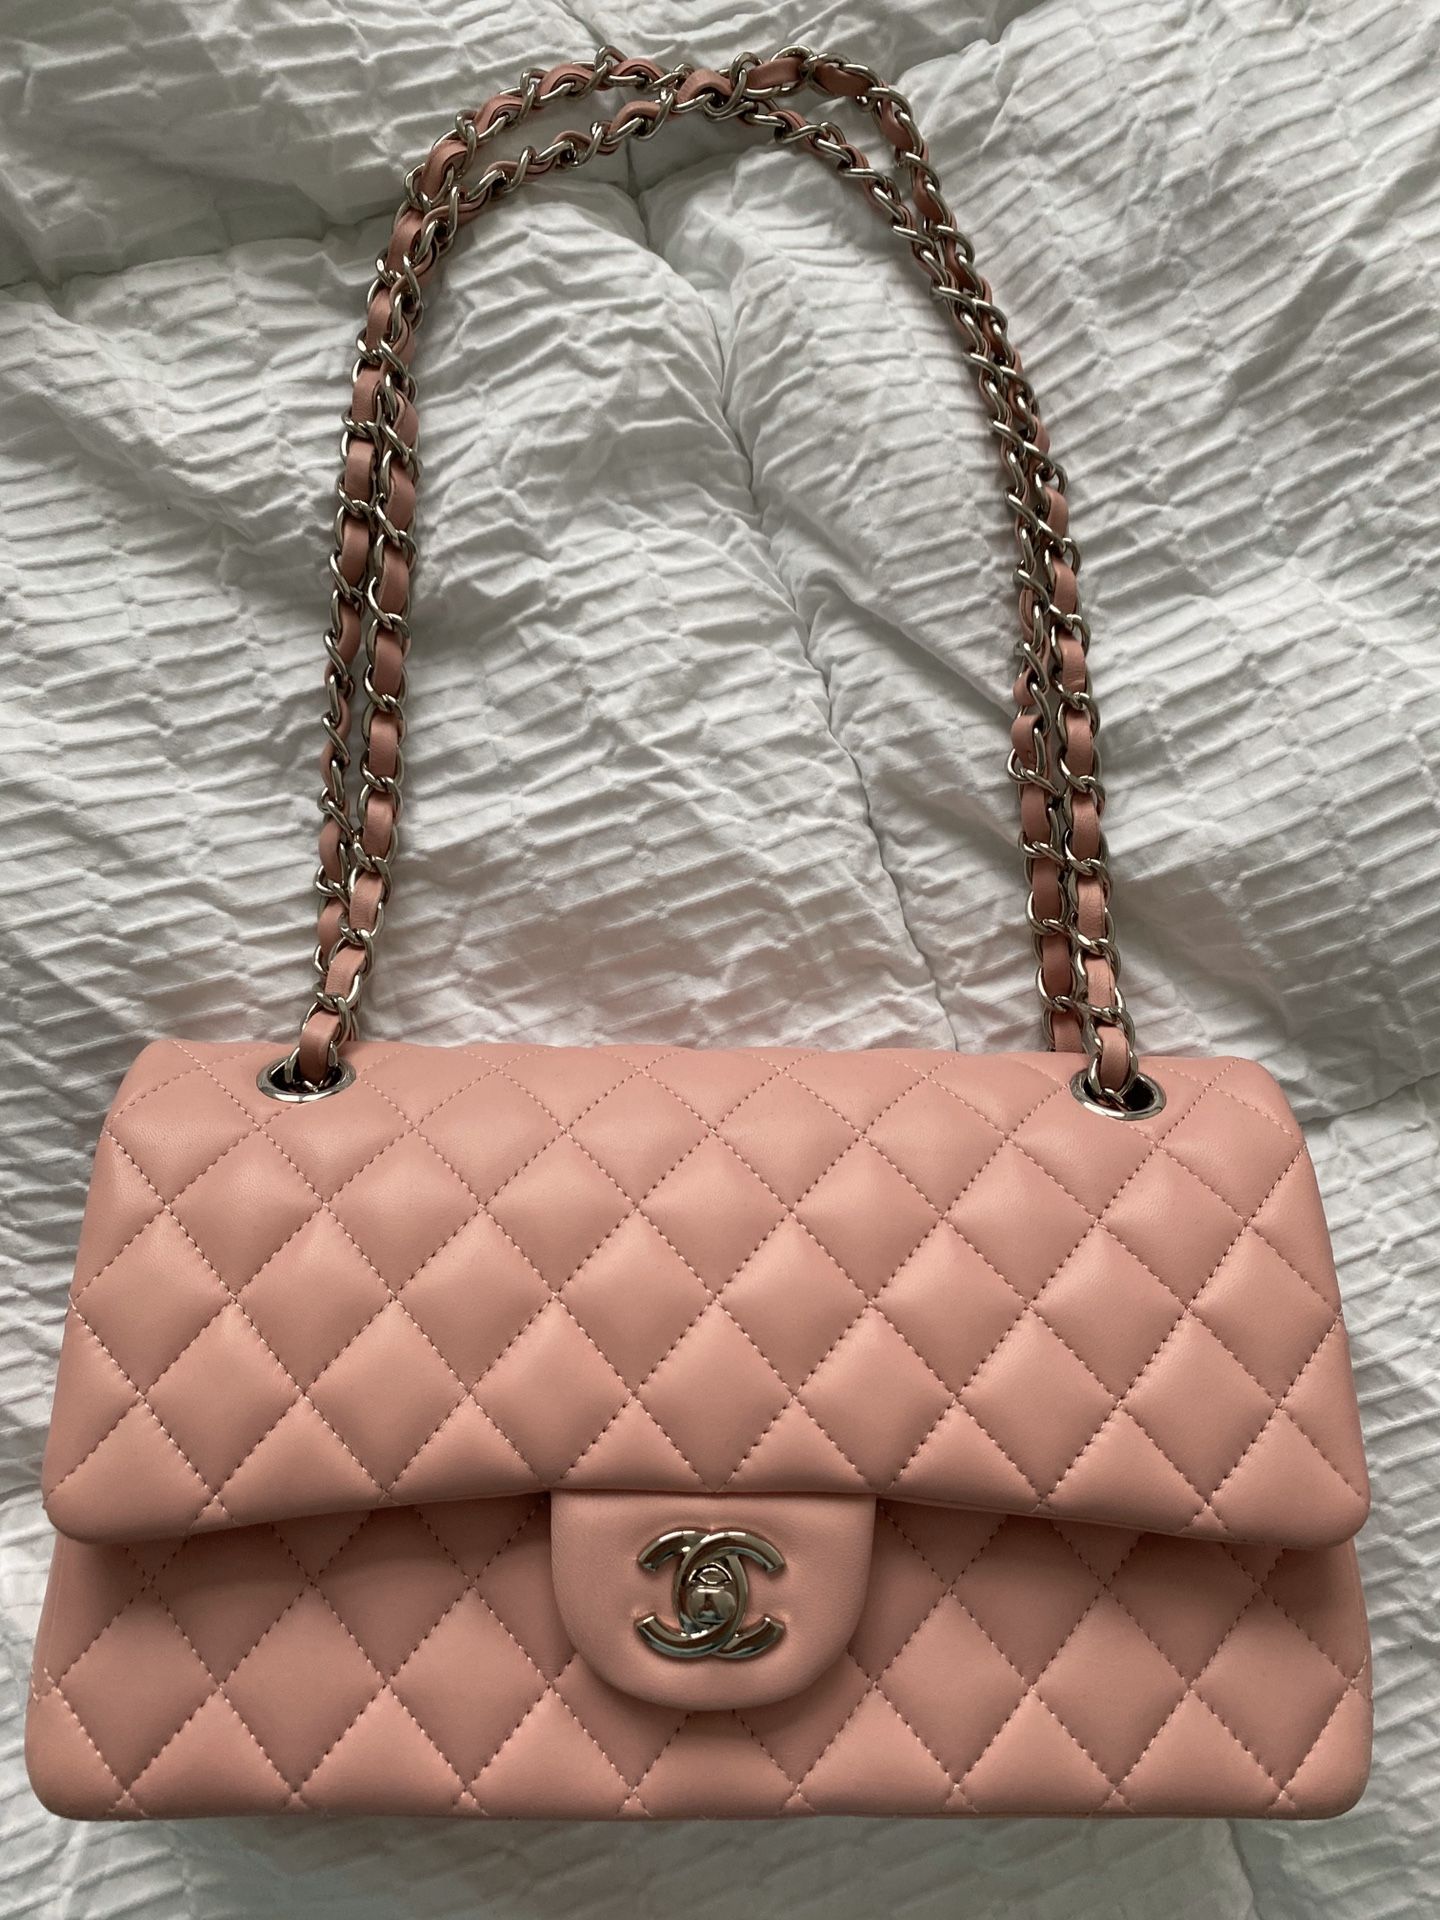 Chanel classic size medium bag